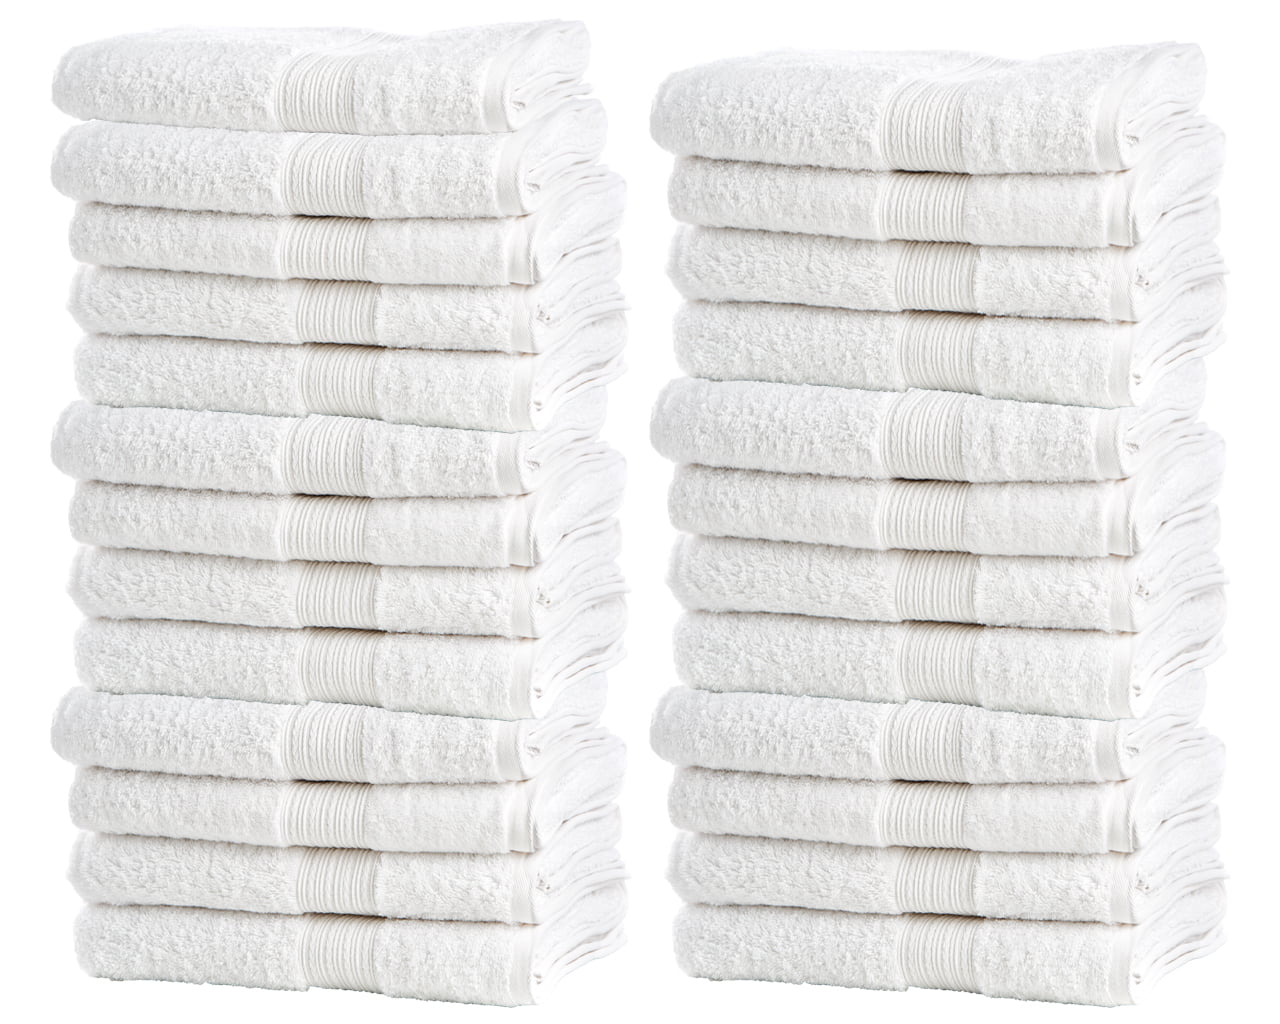 24 new white 100% cotton econ hotel wash cloths 12x12 washcloths heavy duty 